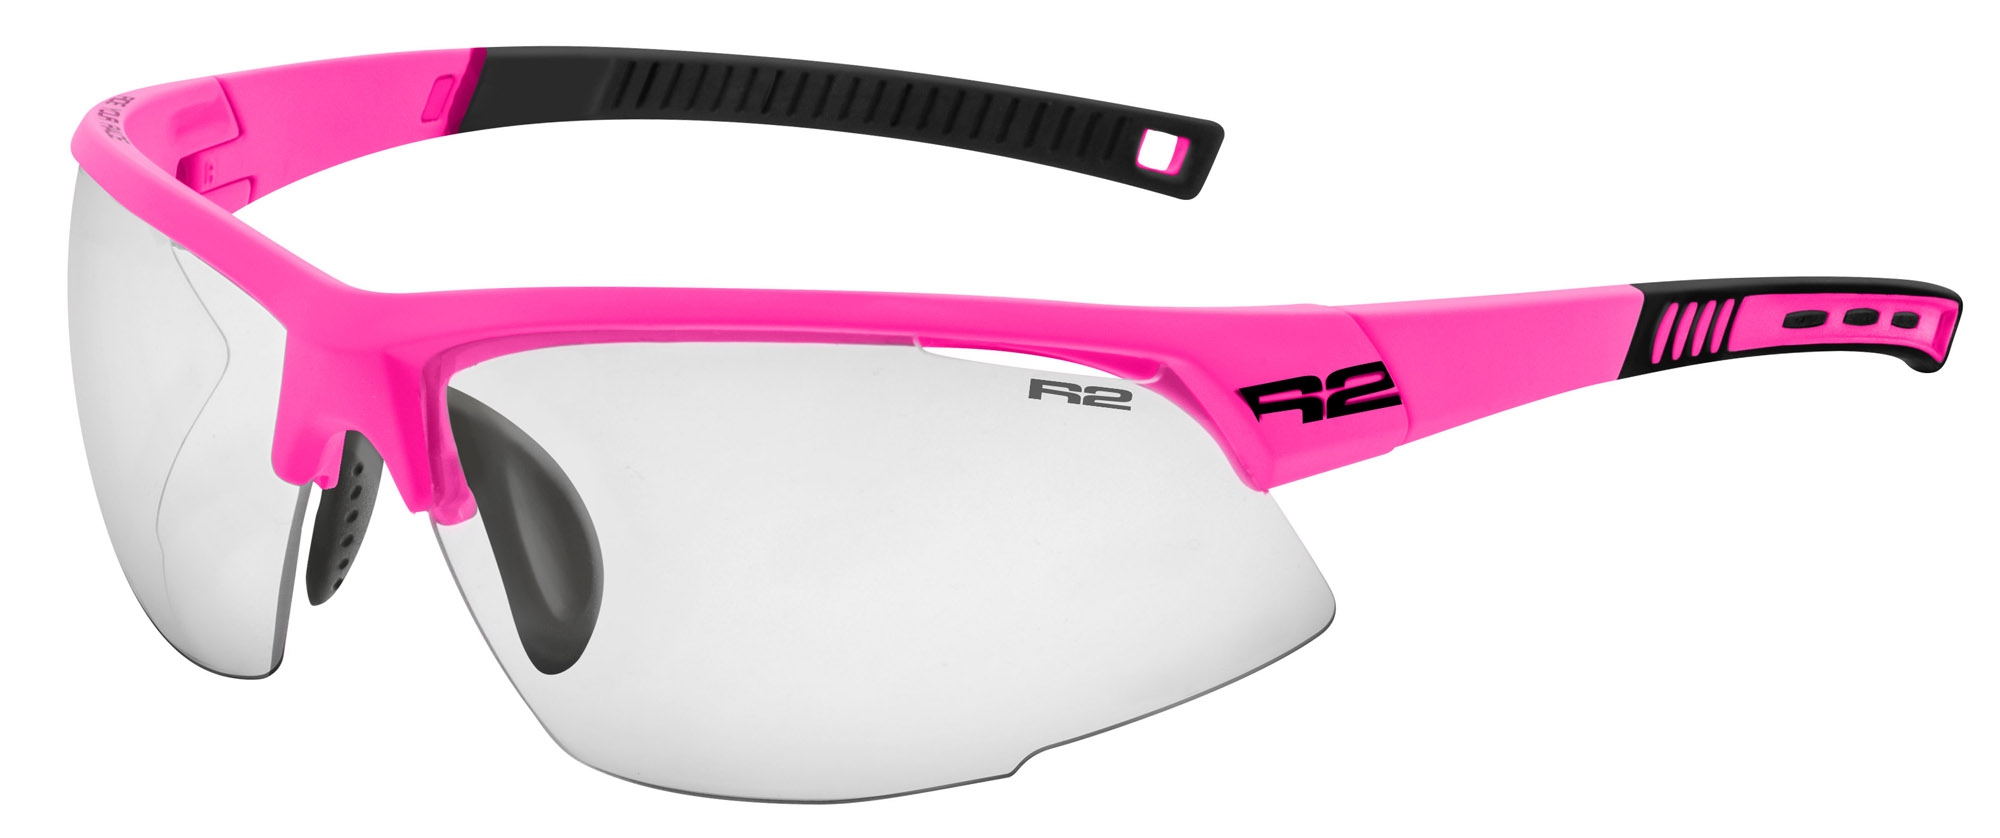 Photochromatic sunglasses  R2 RACER AT063P/PH